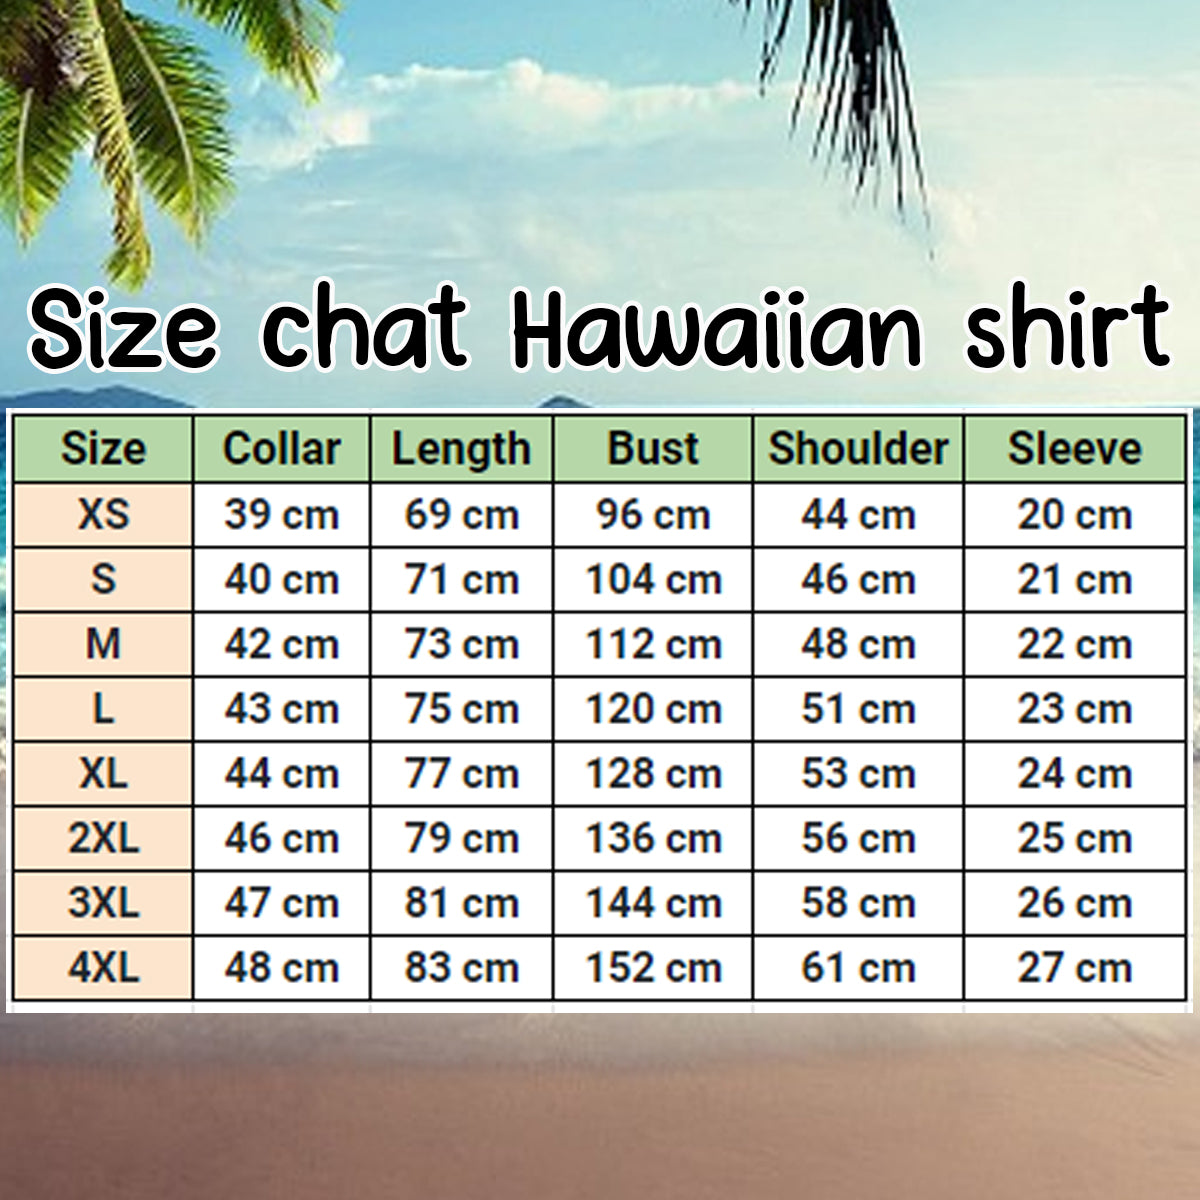 Happy Neapolitan Mastiff Dog Lovers Summer Beach Palm Tree Hawaiian Shirt/ Summer aloha hawaii shirt for Men women